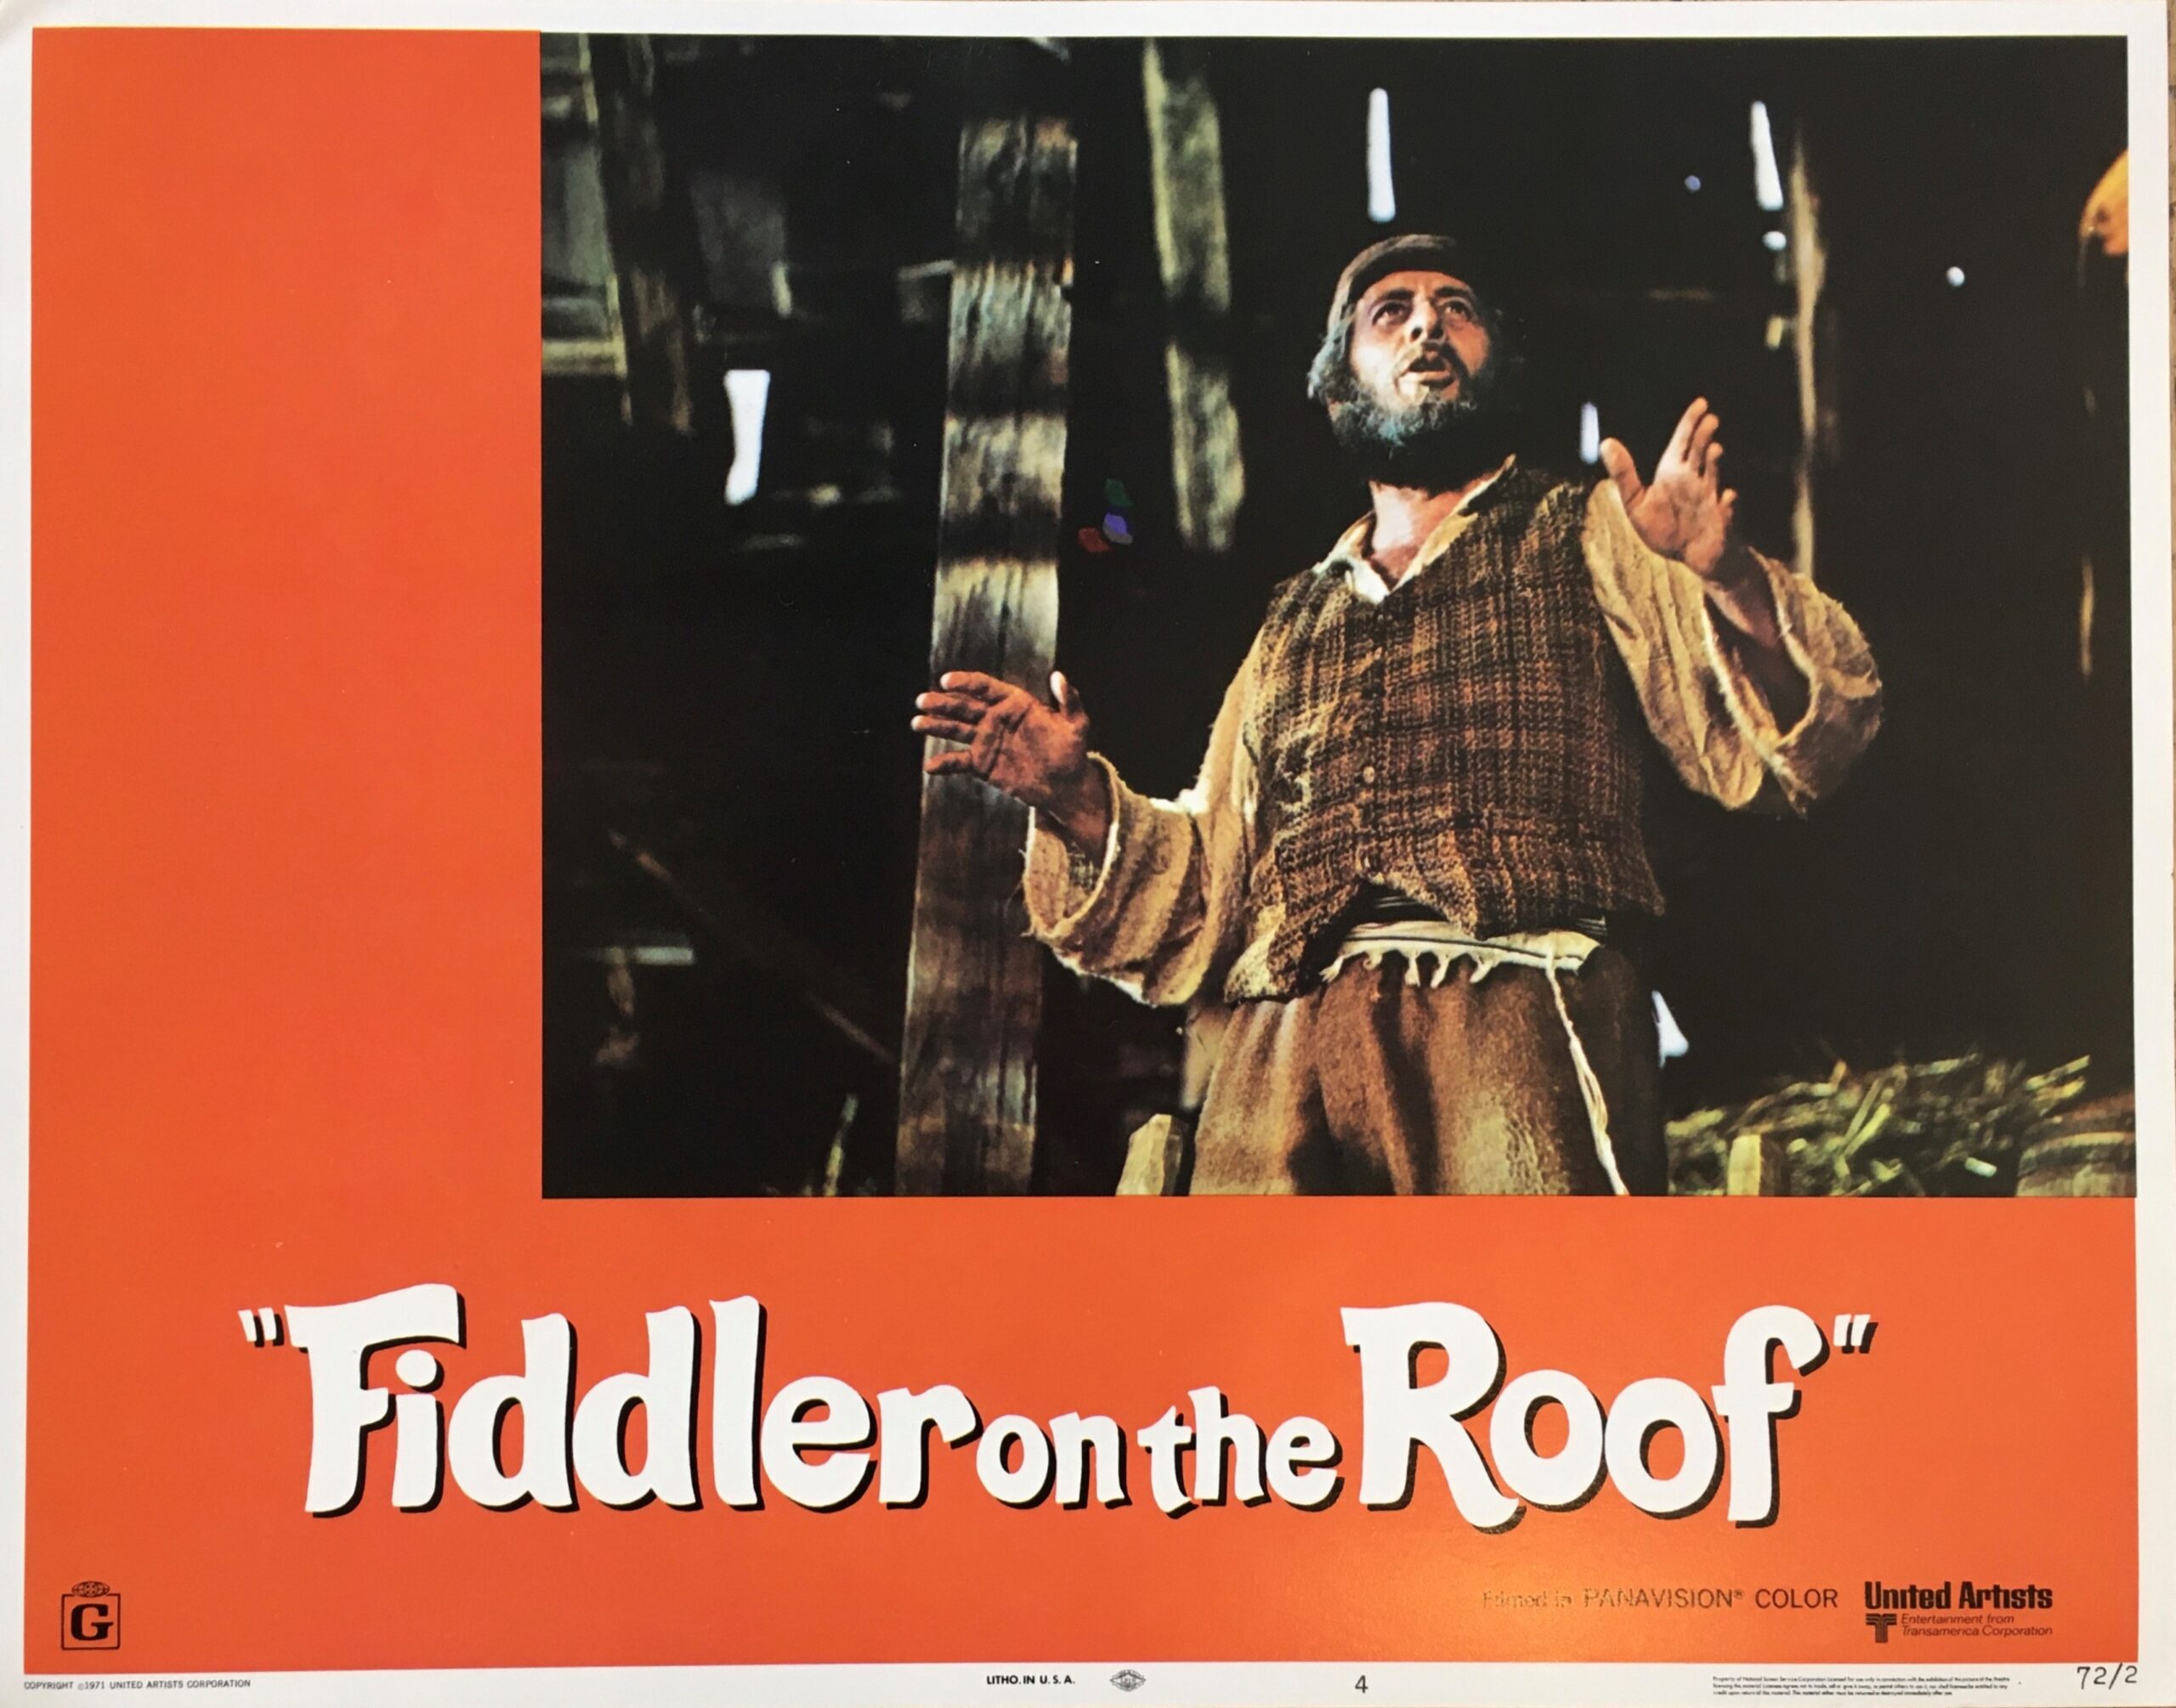 Vintage original US lobby card poster for Fiddler on the Roof.